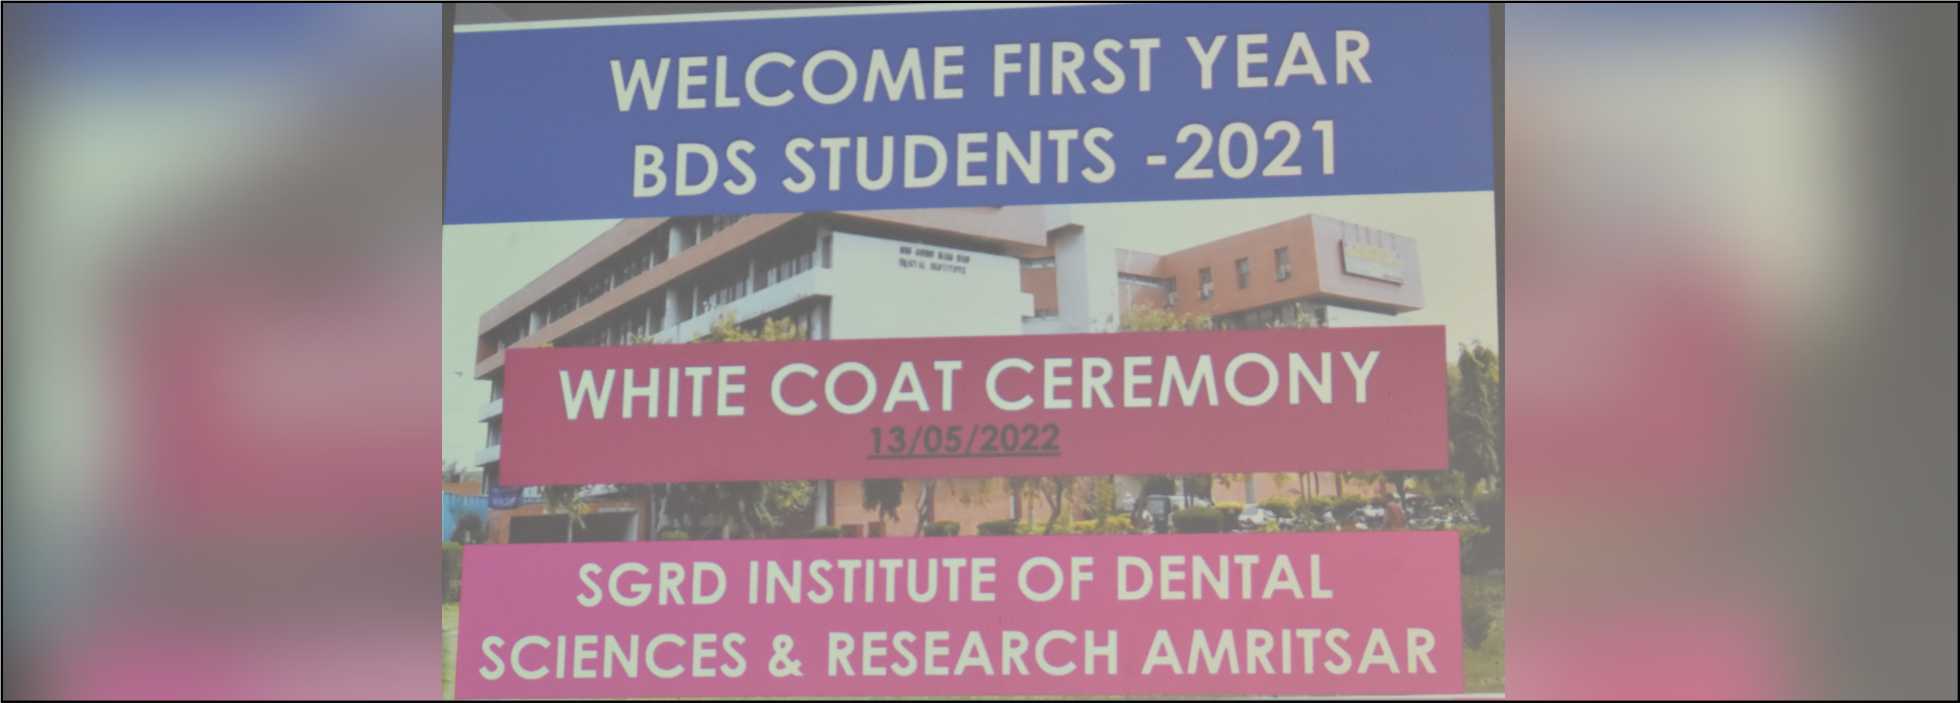 galimgs/Dental College White Coat Ceremony/P - 12.jpg